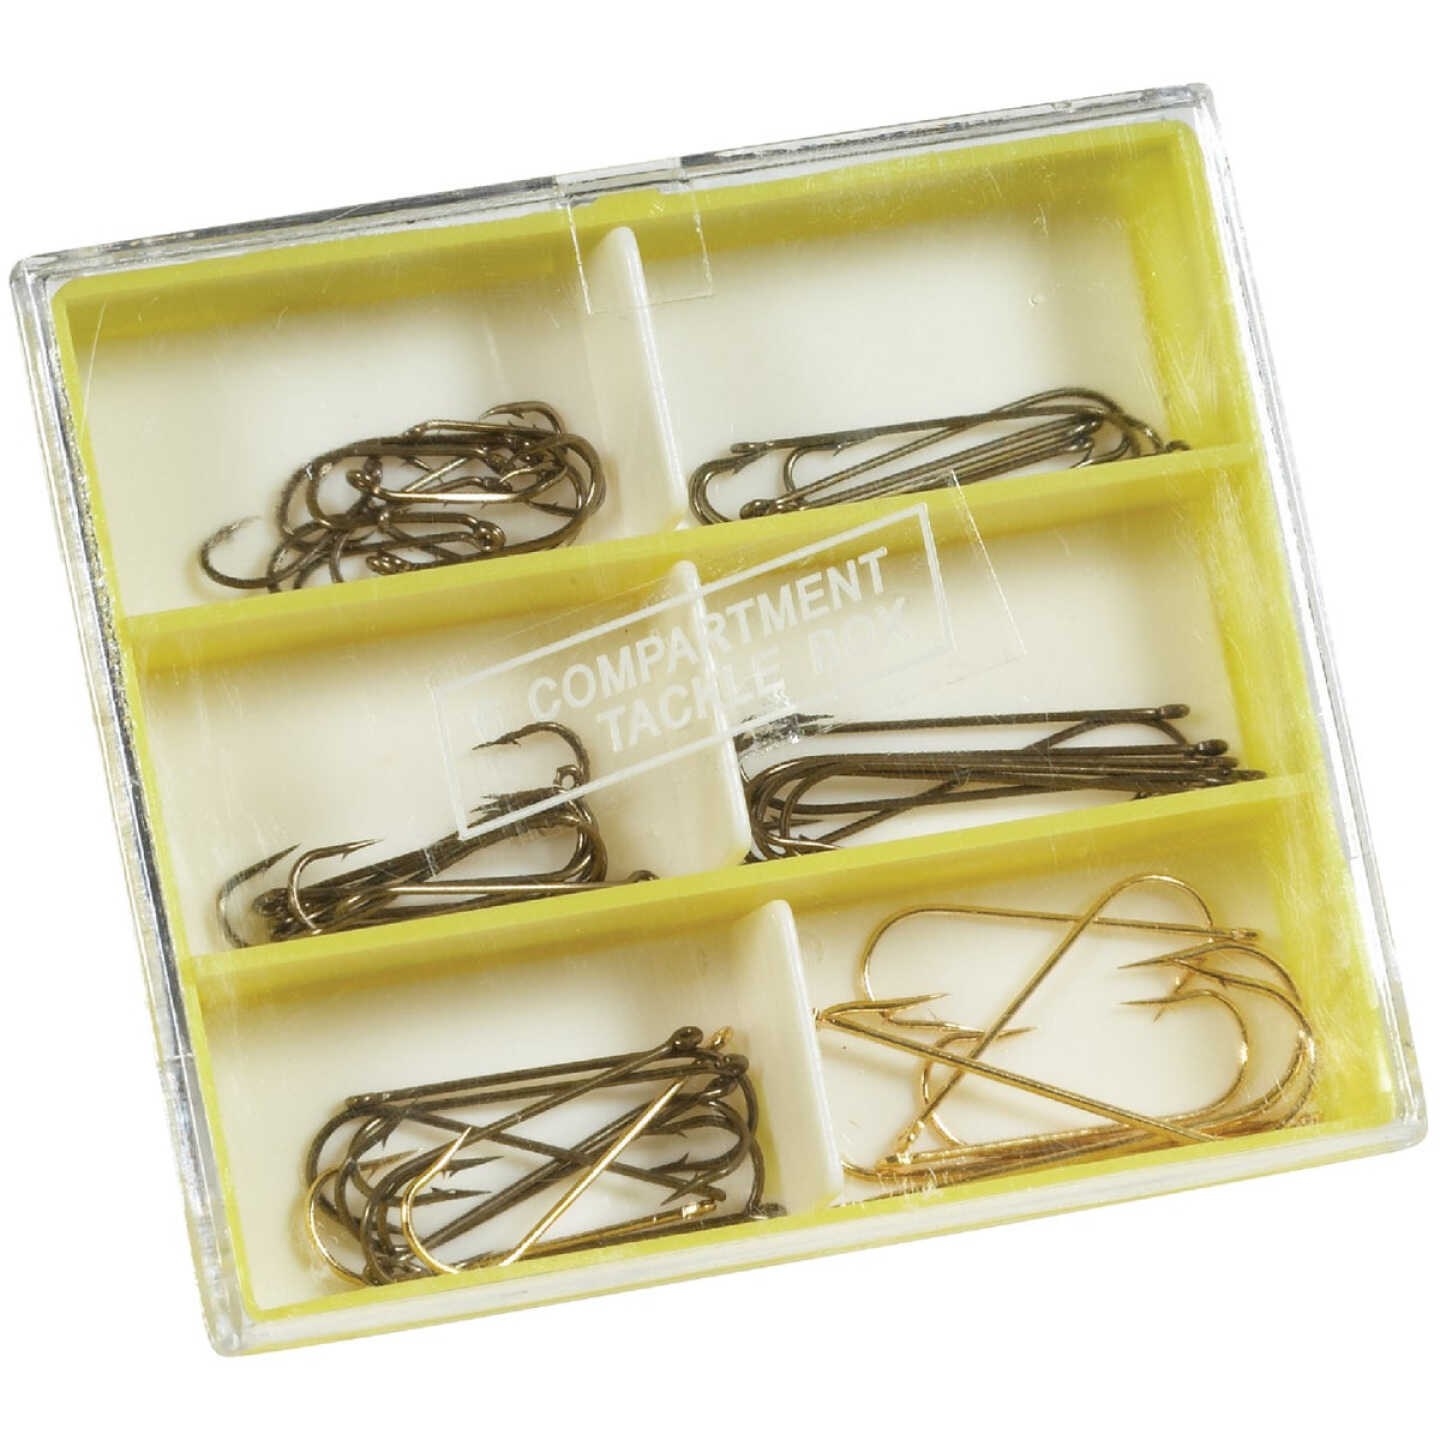 SouthBend 53-Piece Crappie & Panfish Hook Kit Assortment - Roush Hardware